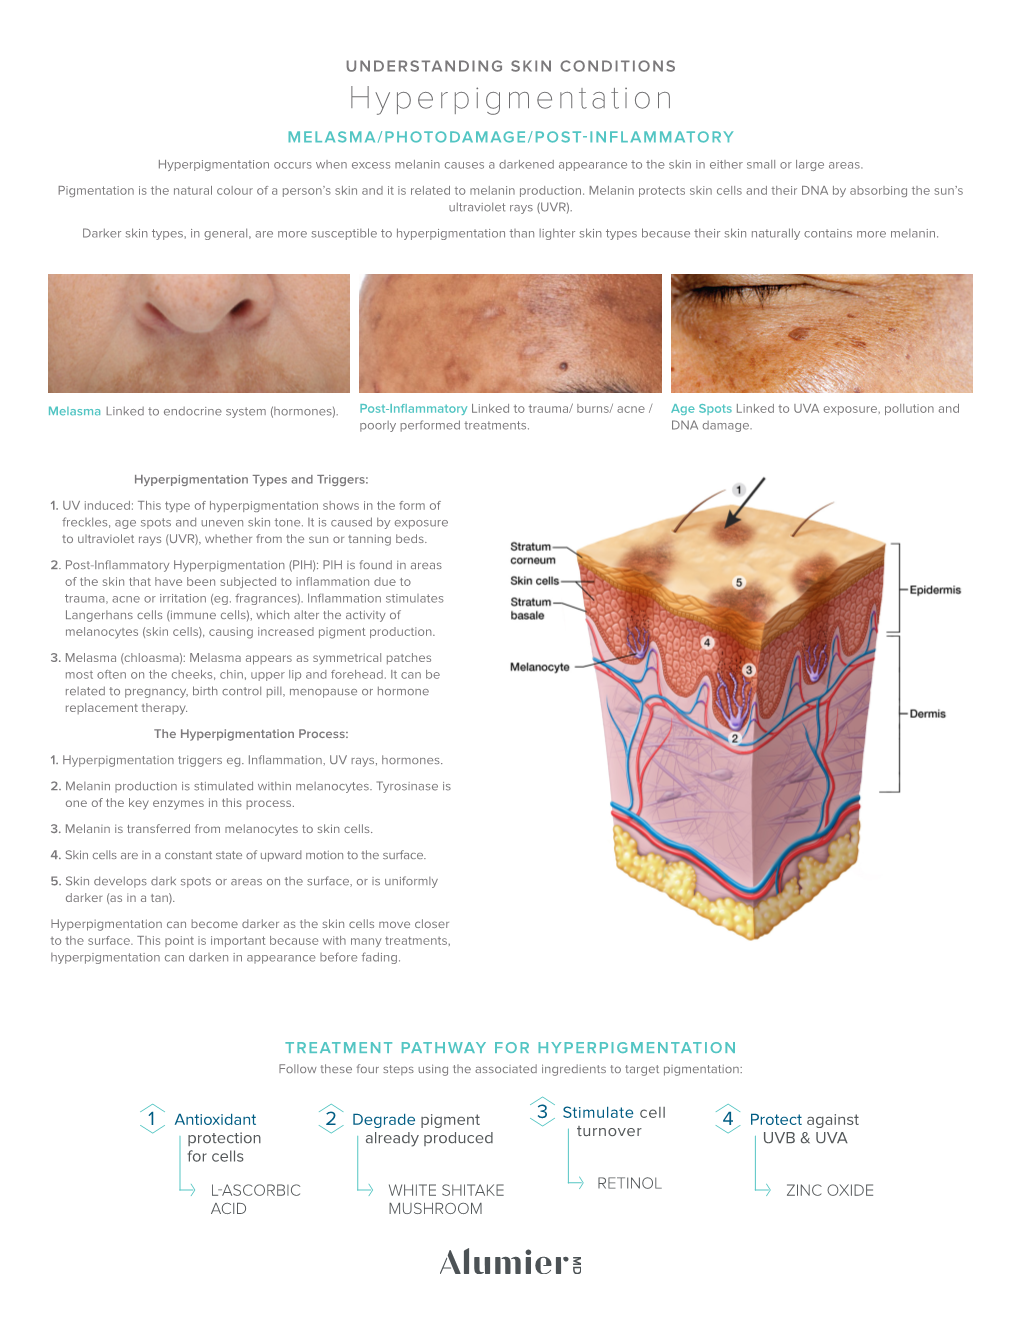 Alumiermd Melasma Skin Condition Sheet